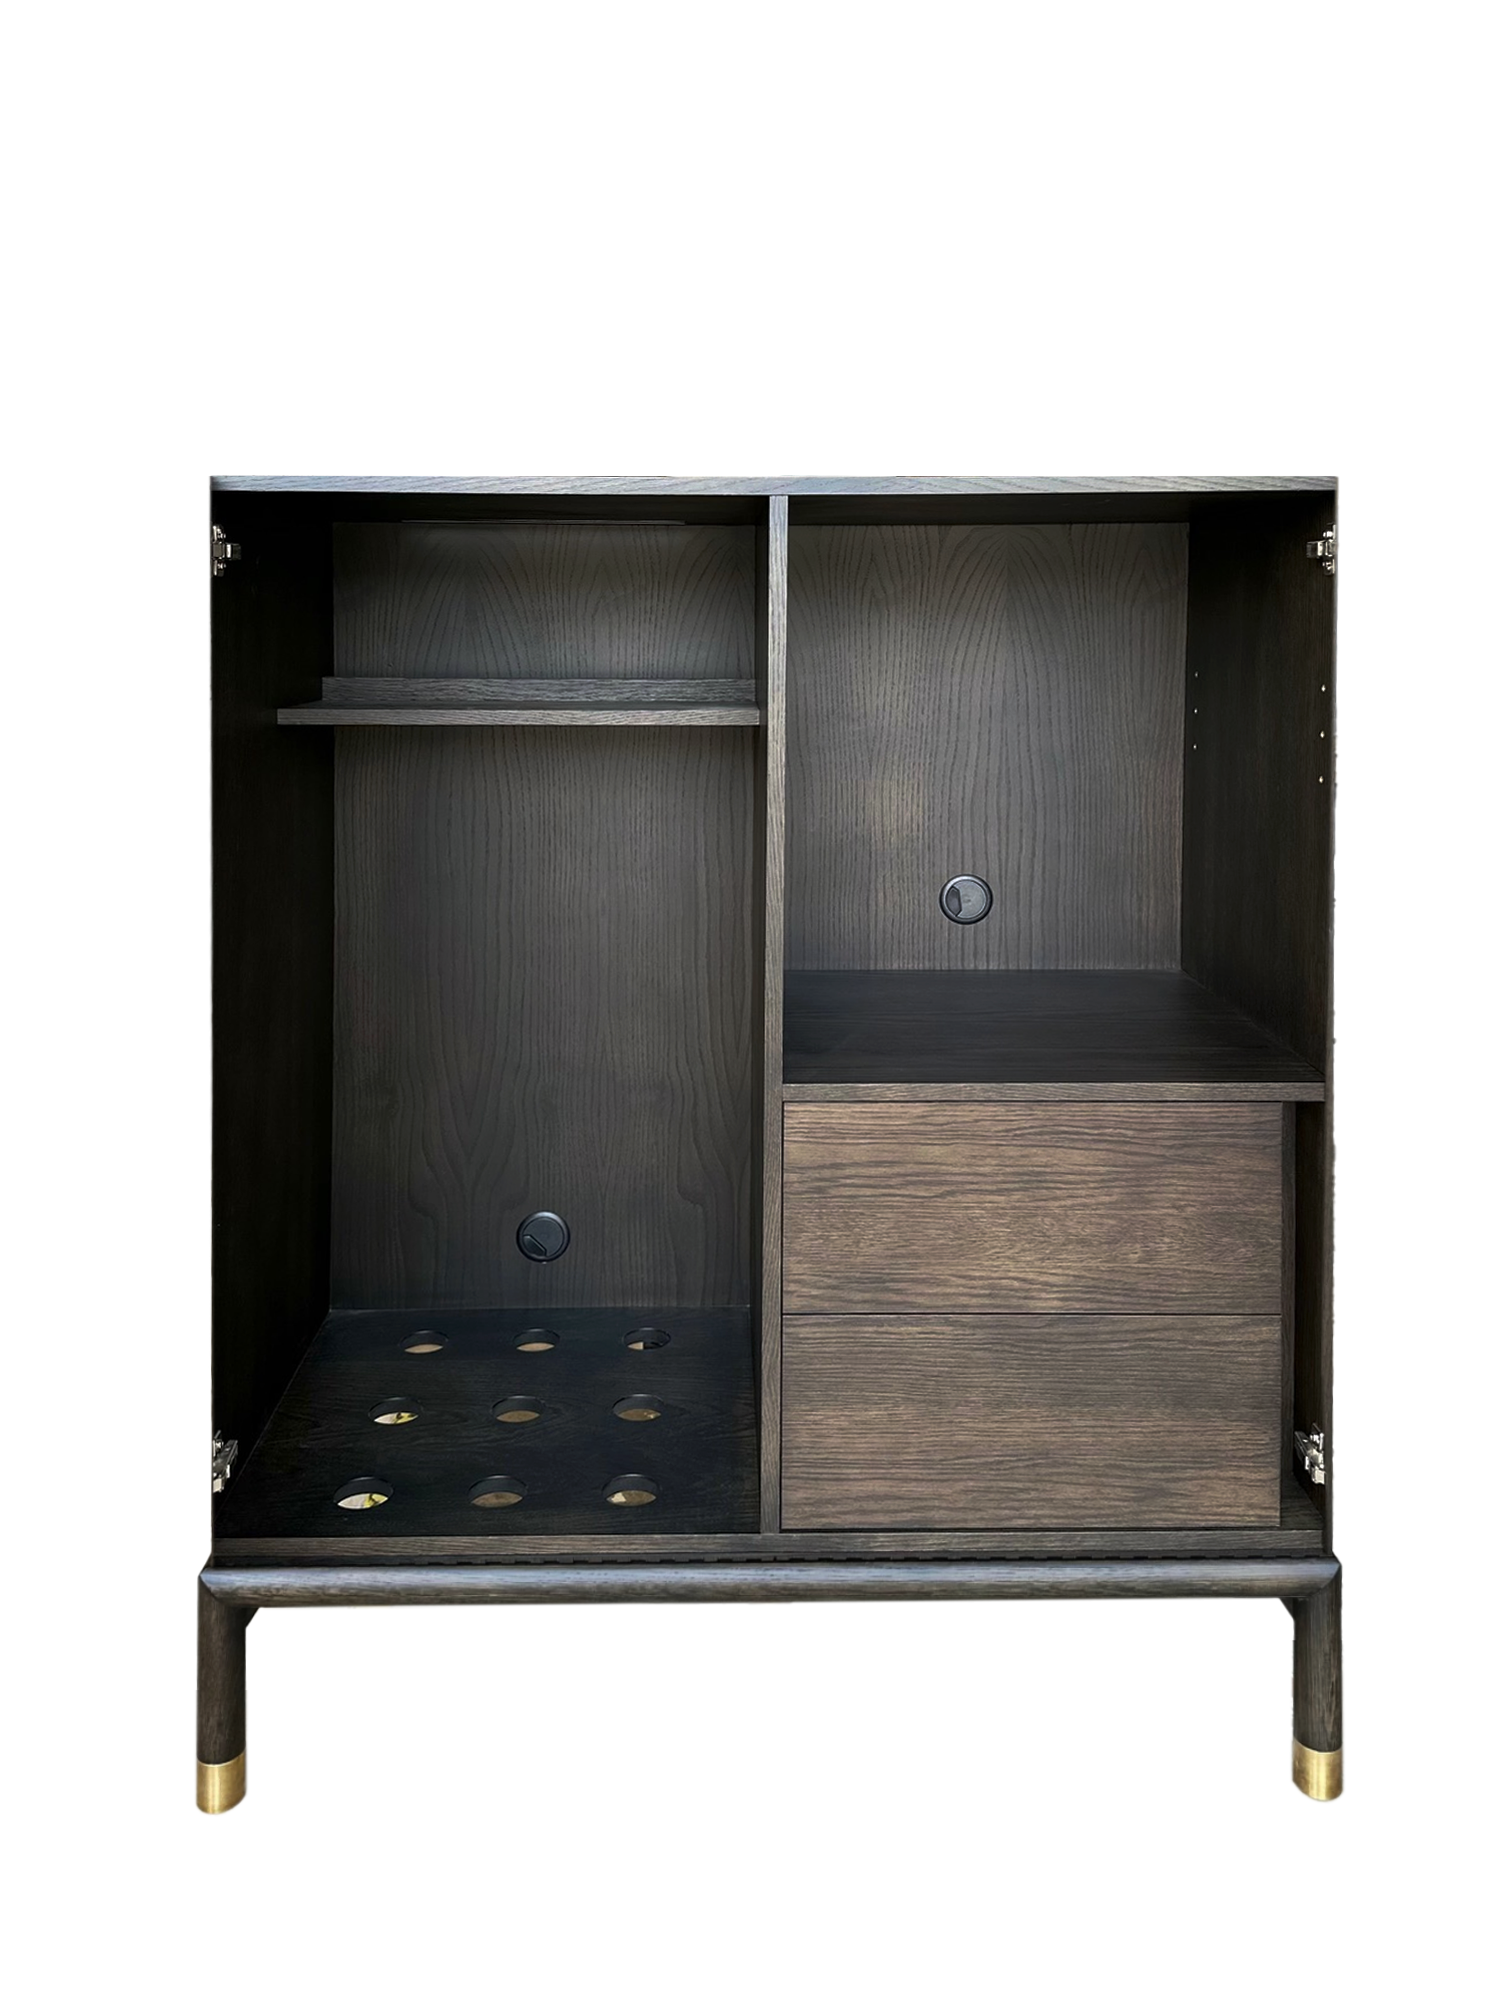 Halo Bar Cabinet - Coal & Carrara Marble Handle - Zuster Furniture